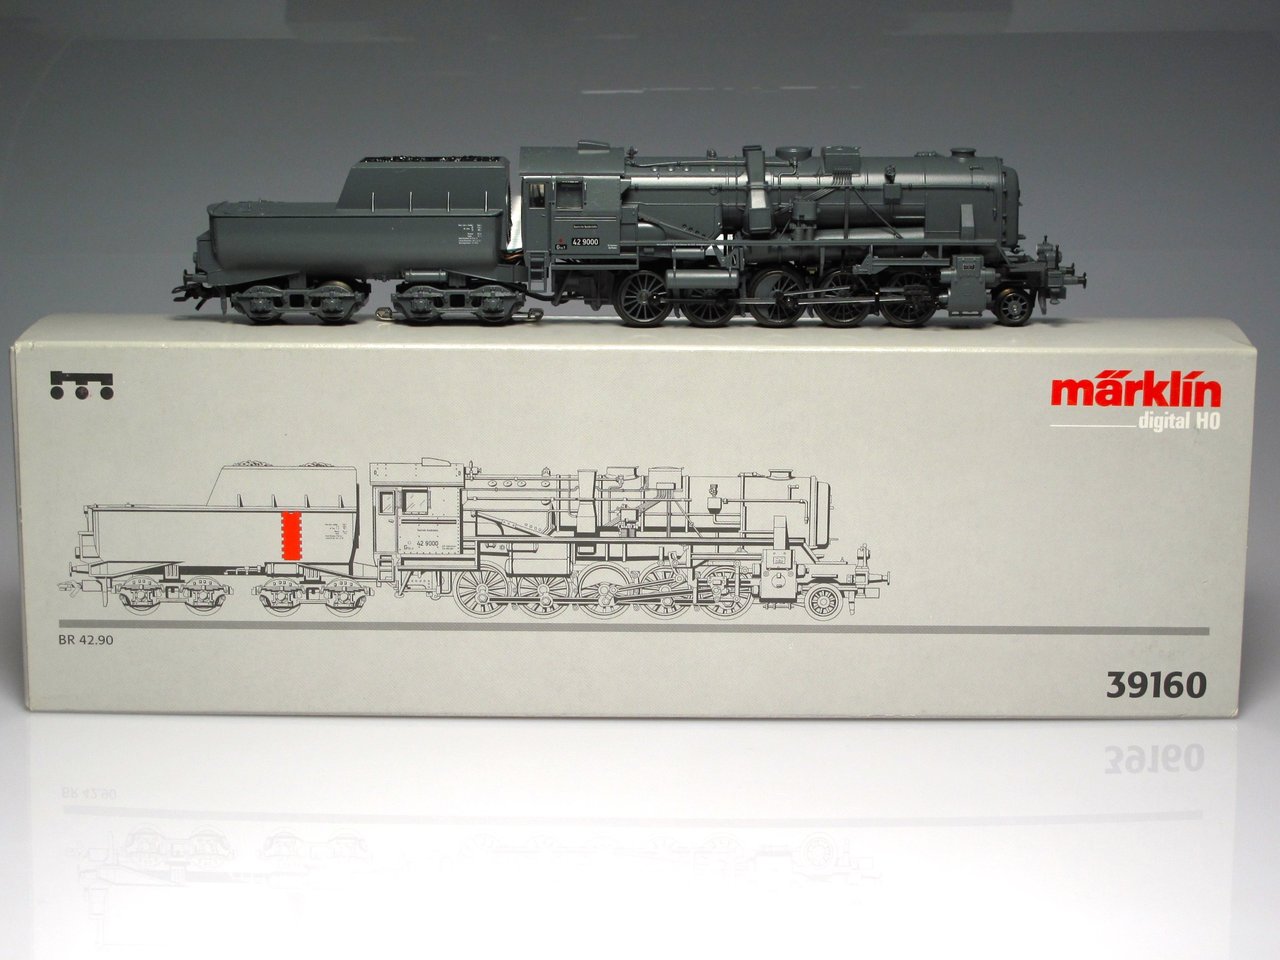 MARKLIN 39160 Locomotora de vapor BR 42.90 " Franco Crosti "